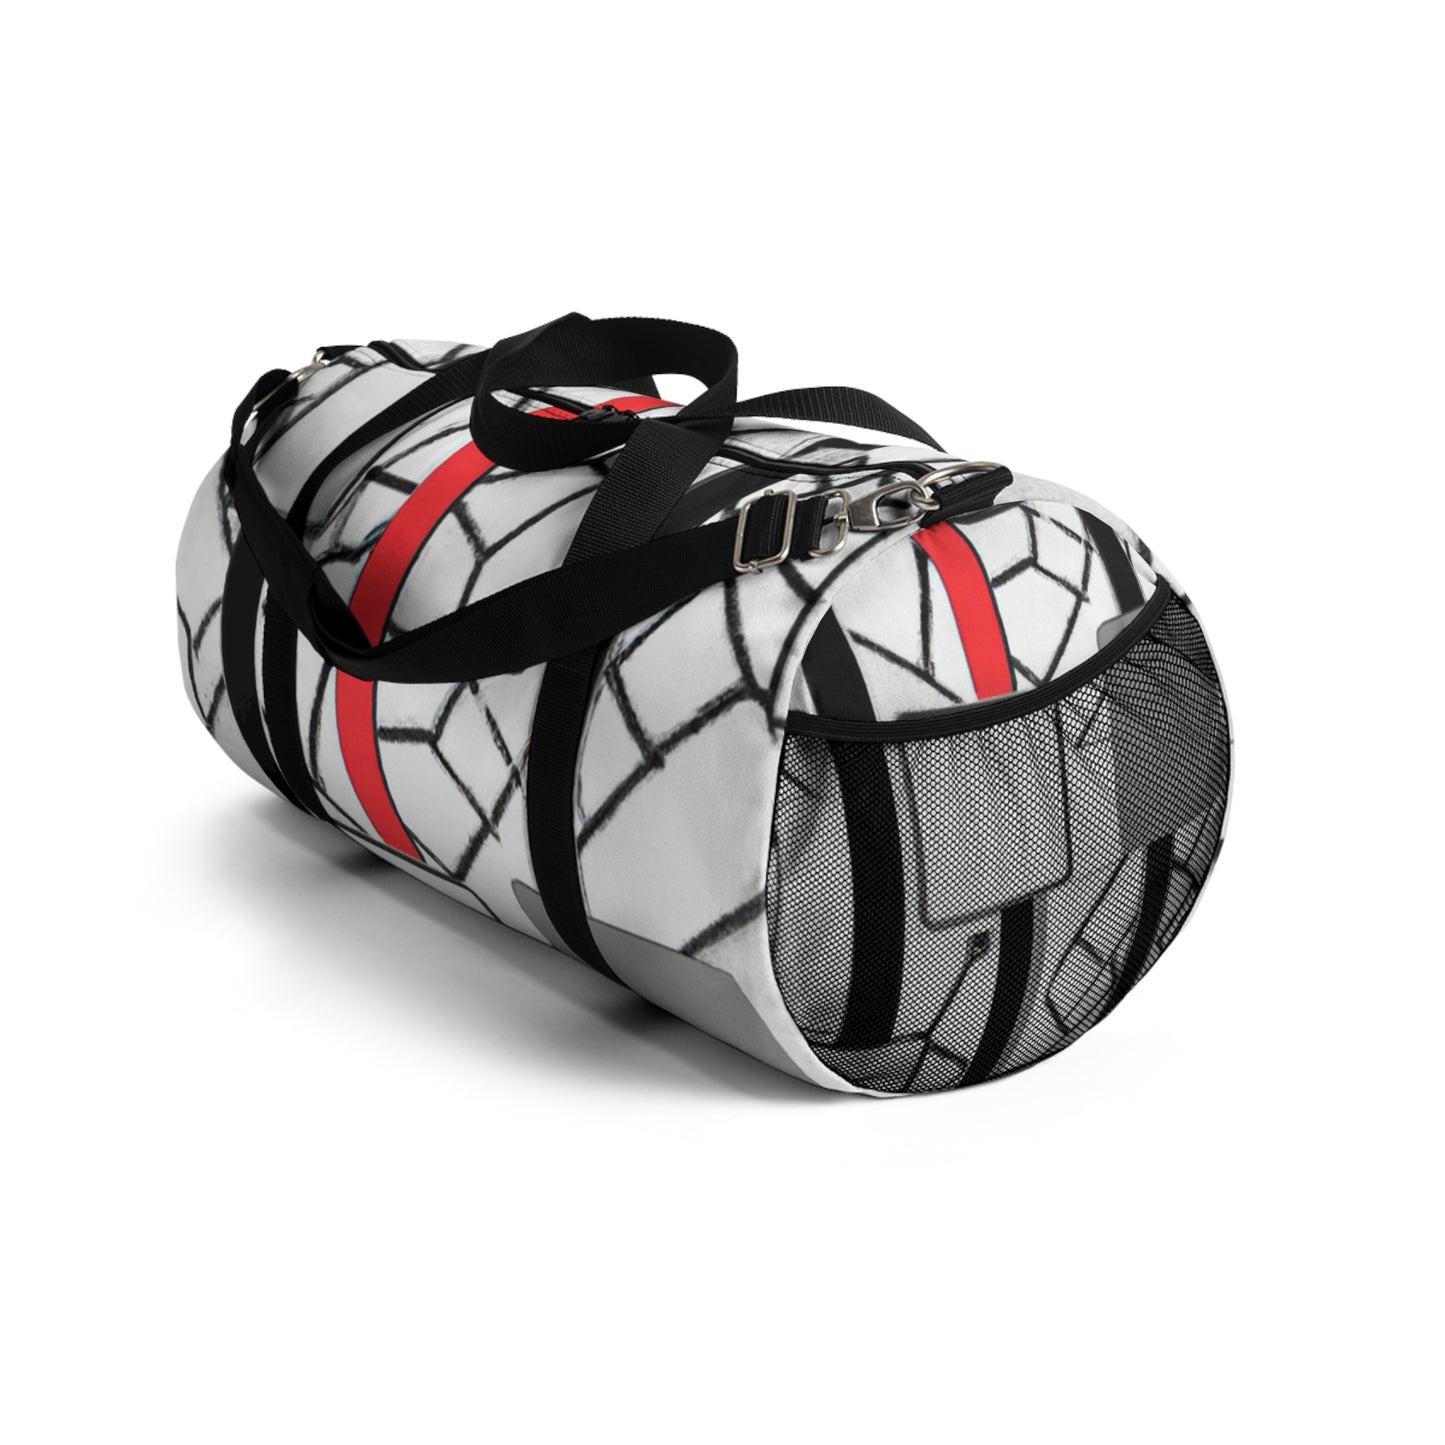 Selina Smoothington - Geometric Pattern Duffel Travel Gym Luggage Bag